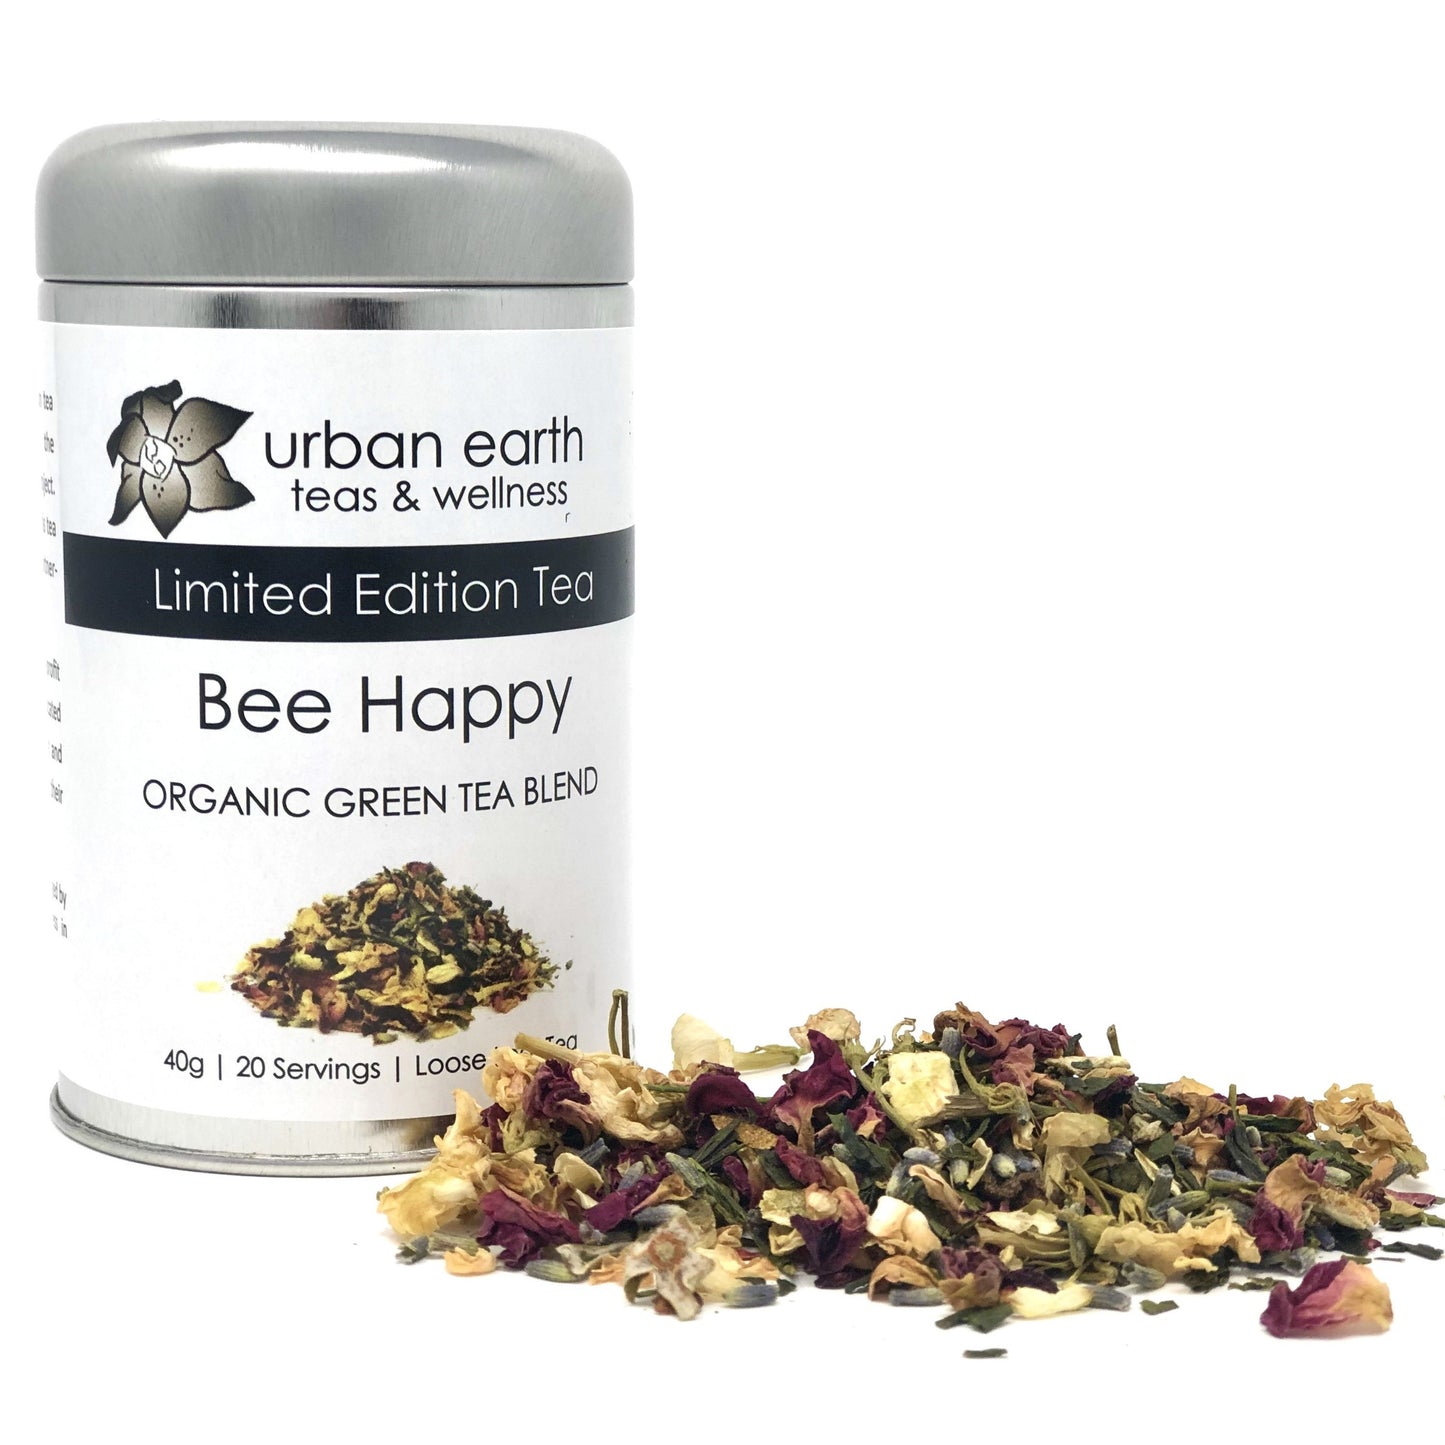 Bee Happy (Pollinator Partnership Fundraiser)